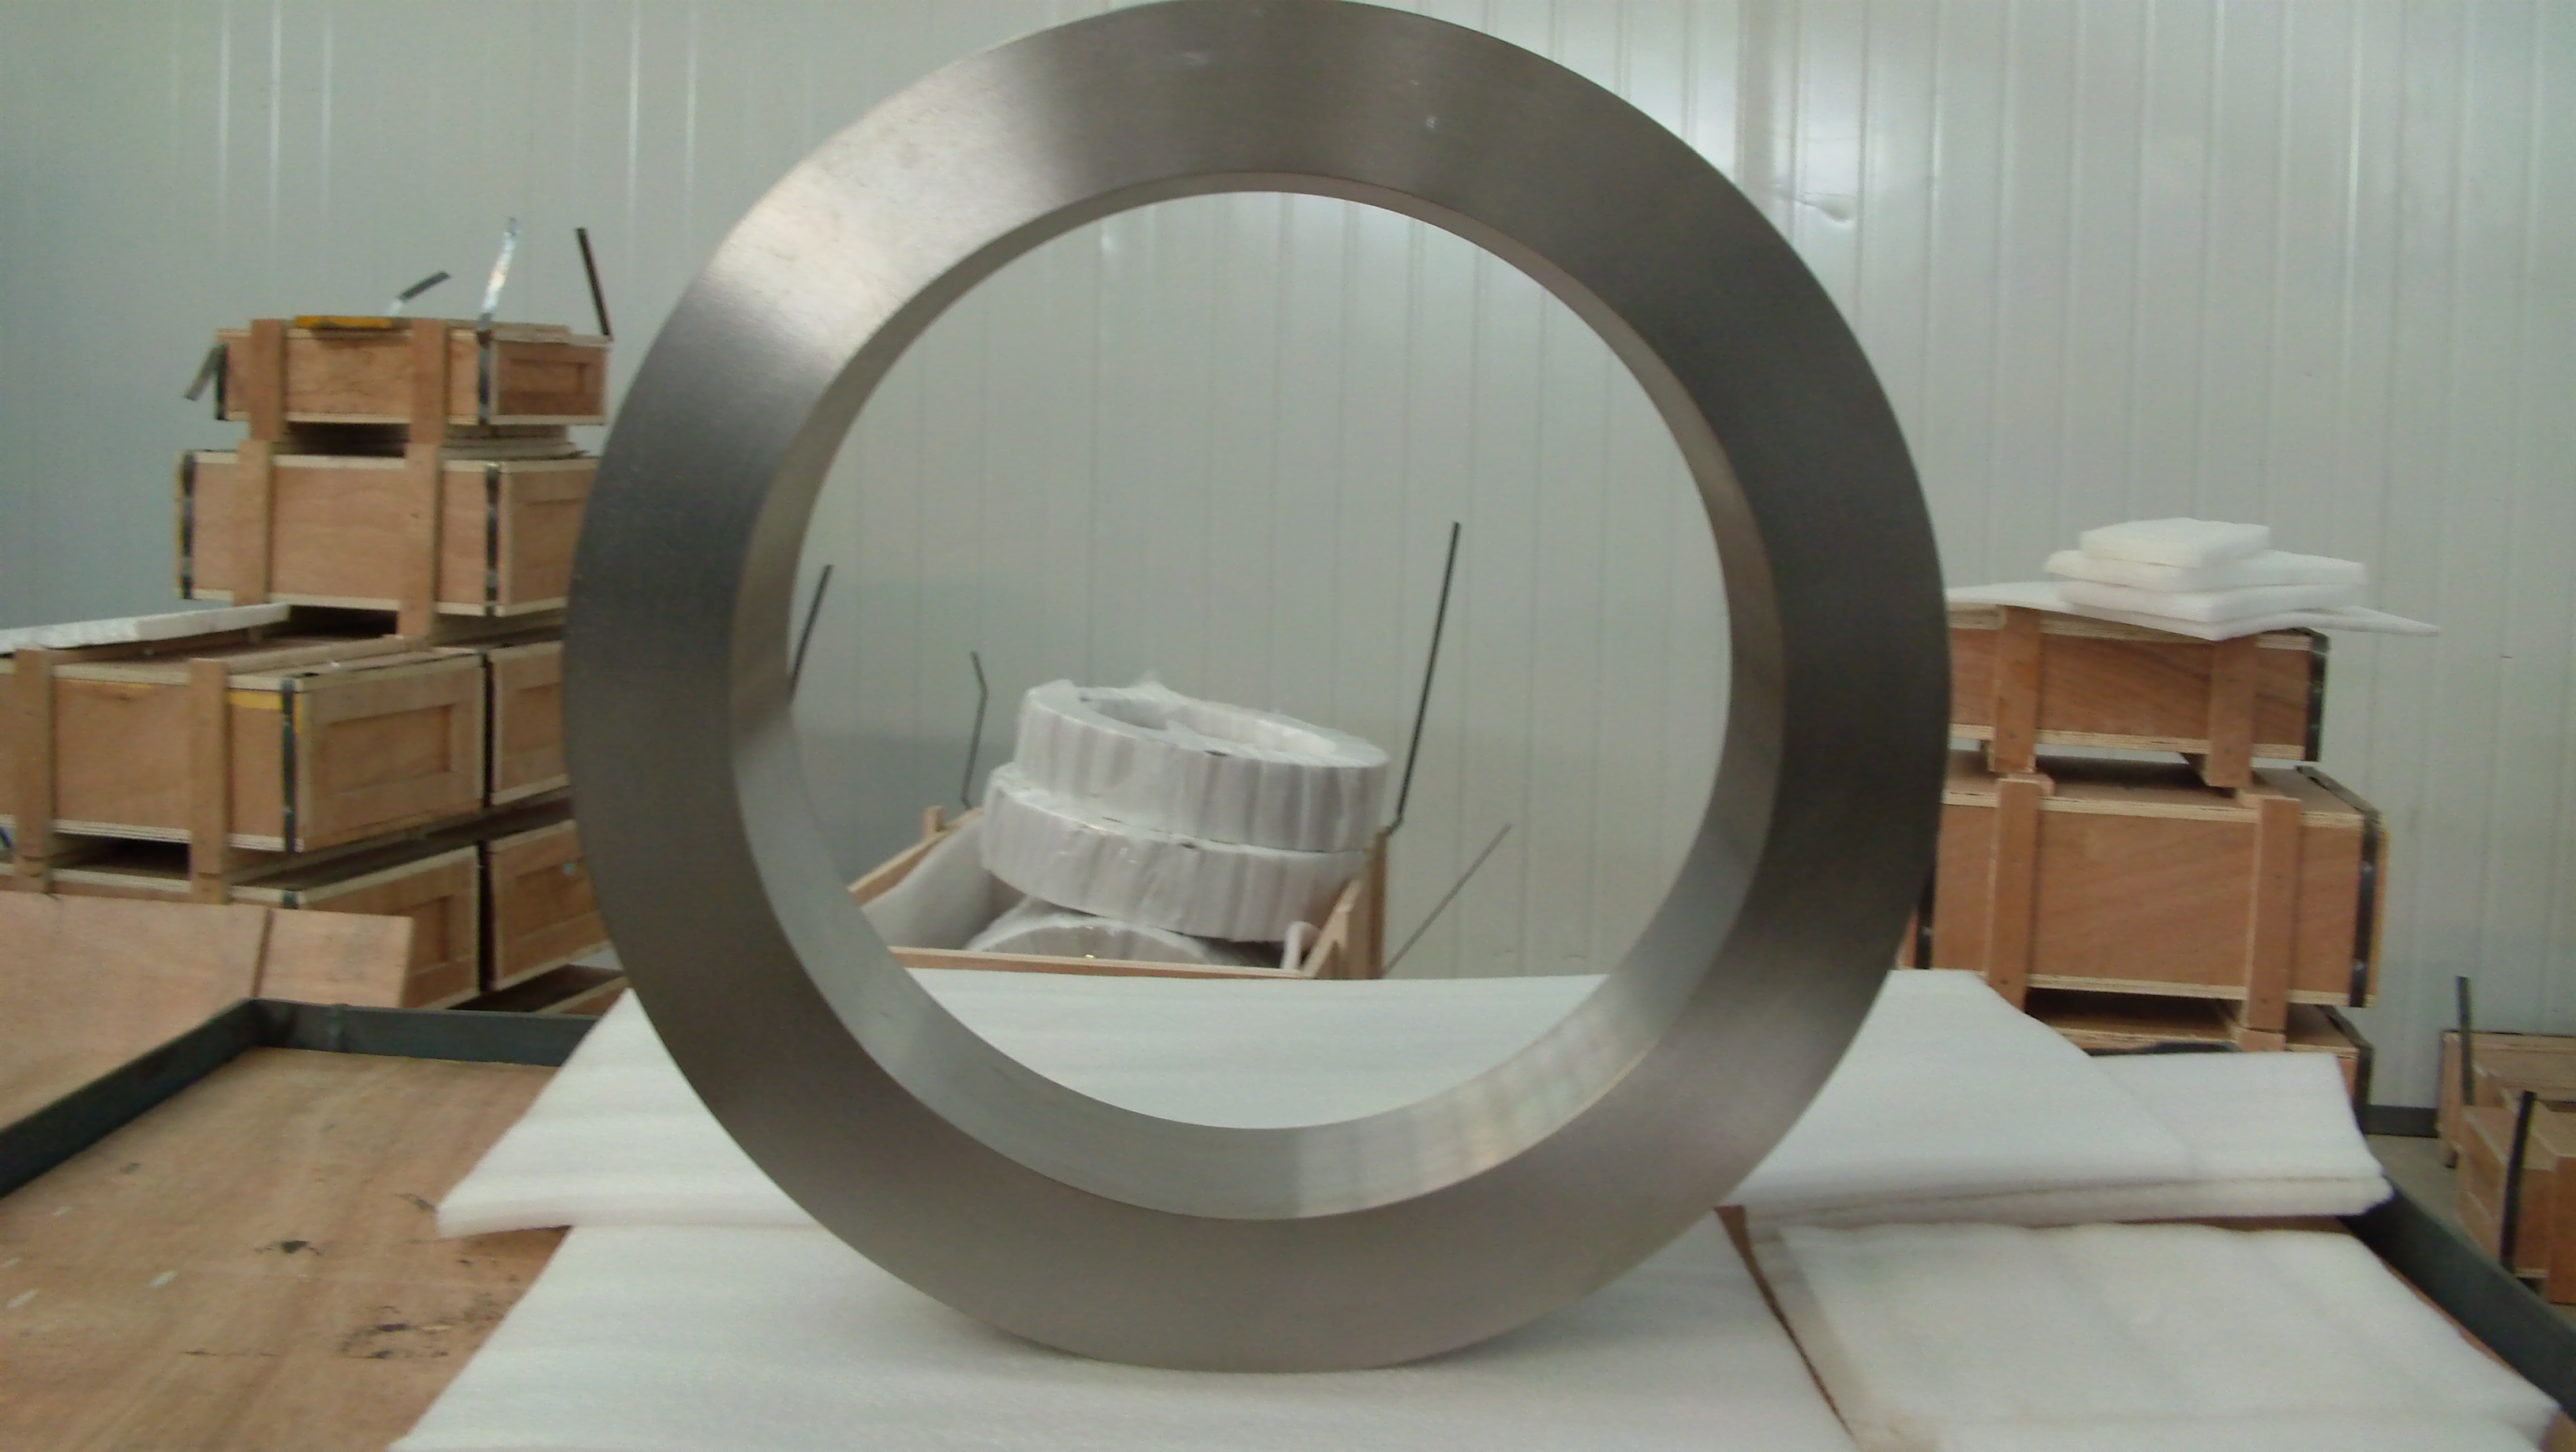 Titanium Forging Ring Gr5 ASTM B381